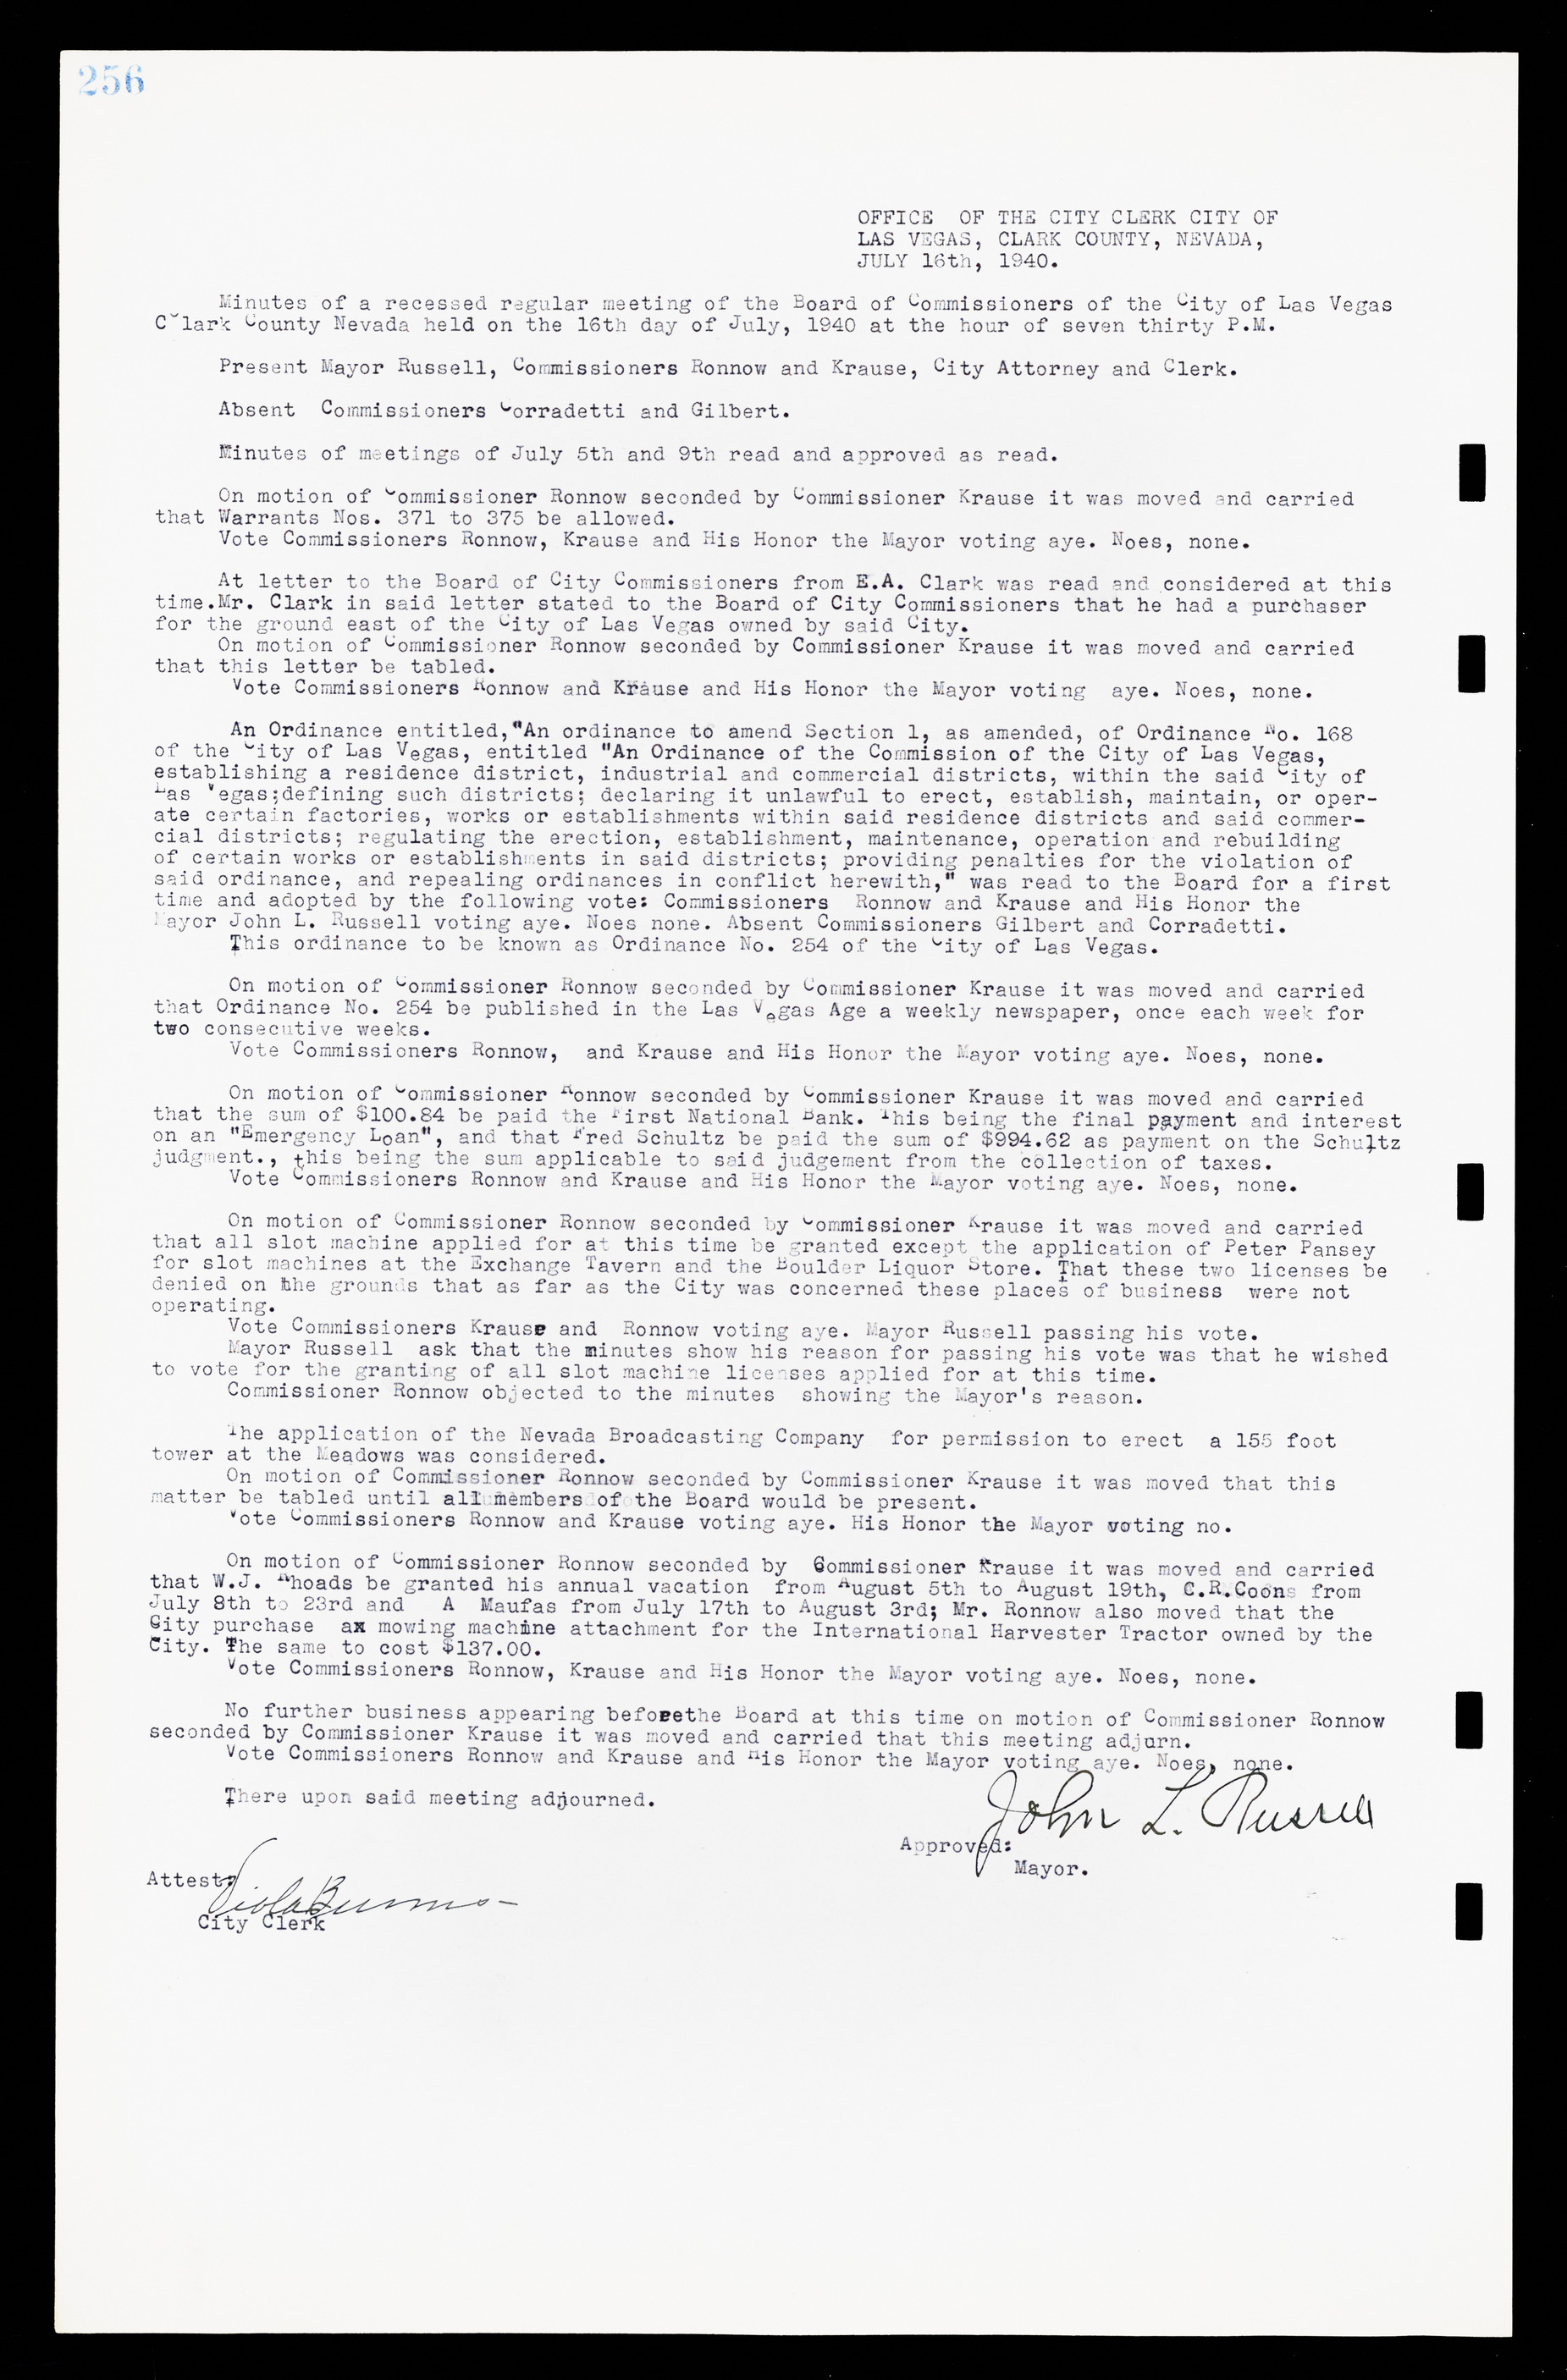 Las Vegas City Commission Minutes, February 17, 1937 to August 4, 1942, lvc000004-278